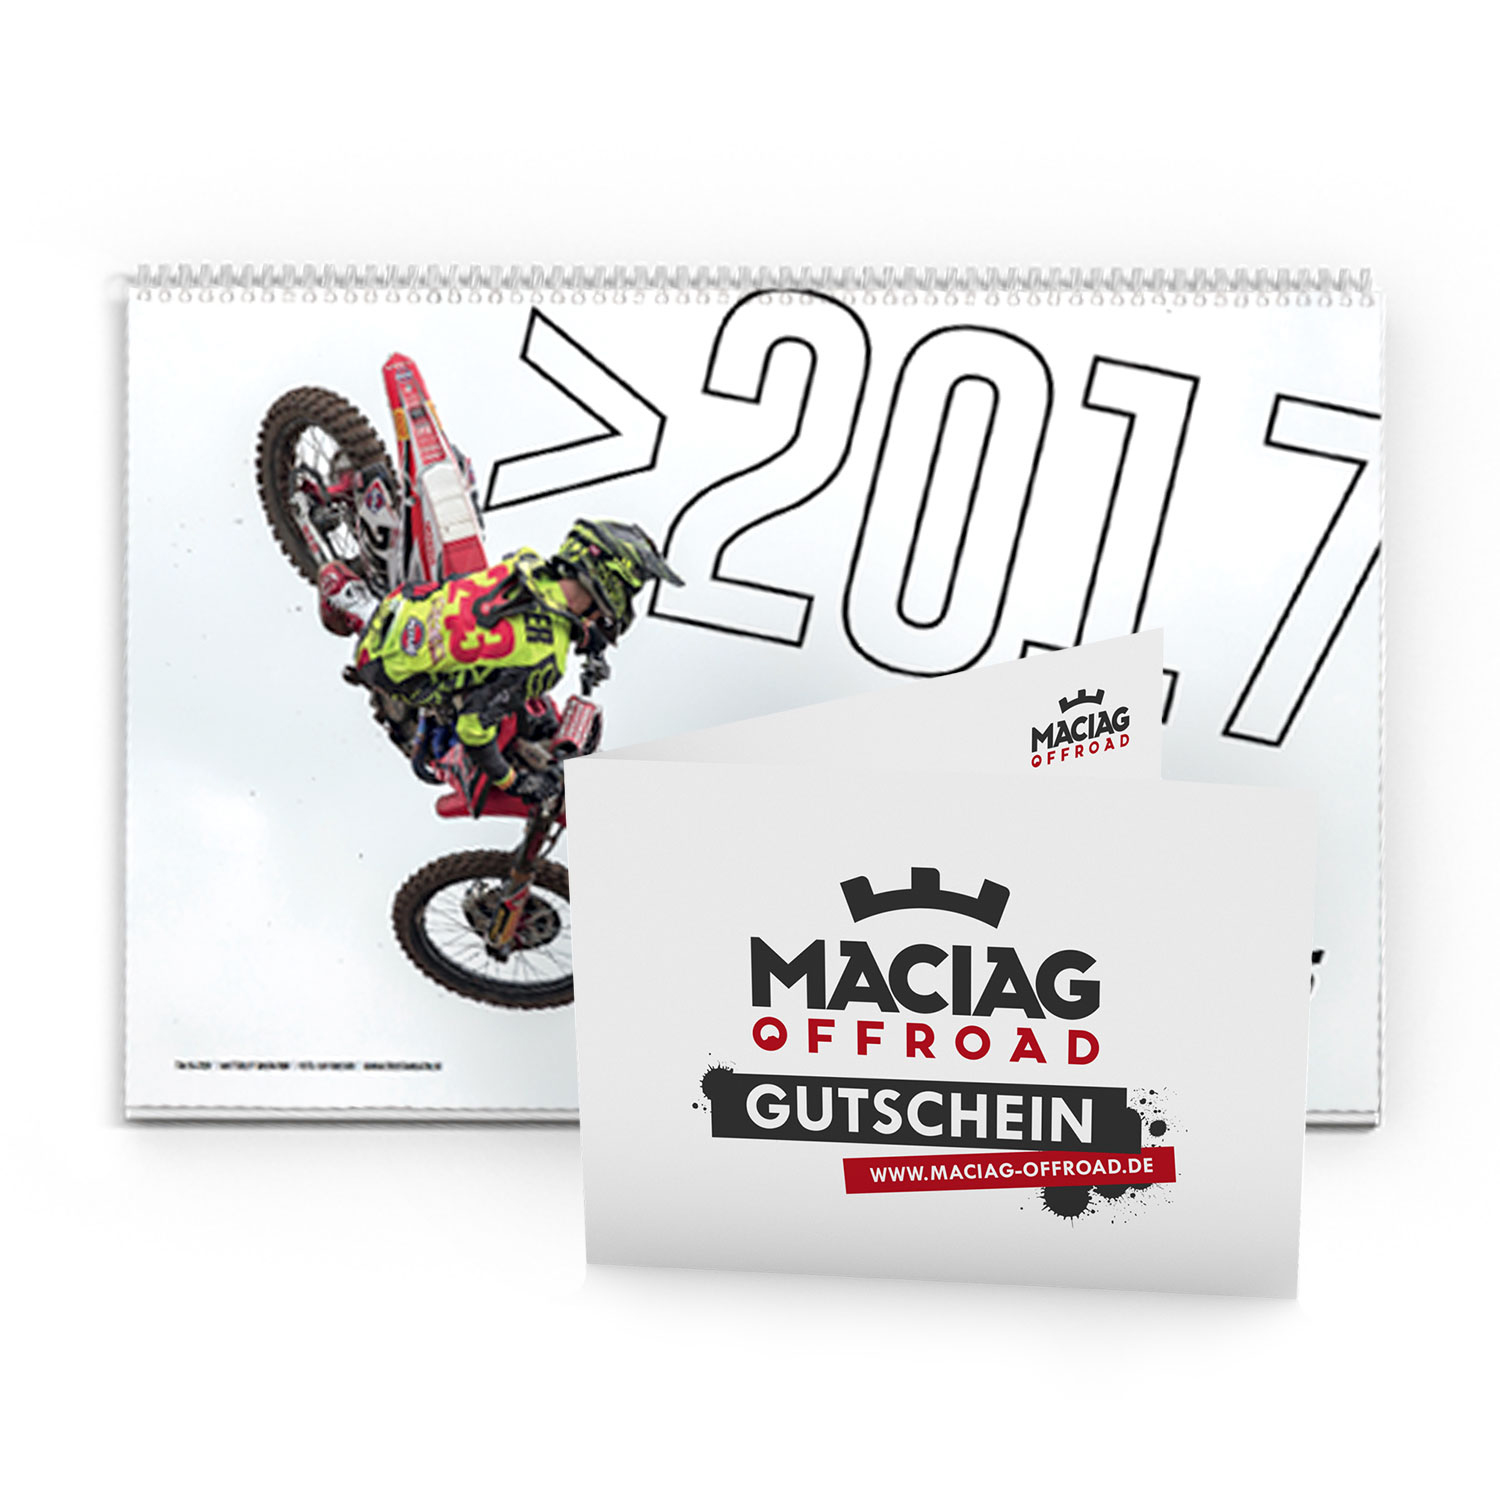 Cross Magazin Bundle-Offer Crossmagazin Calendar 2017 + Voucher 25 Euro  .